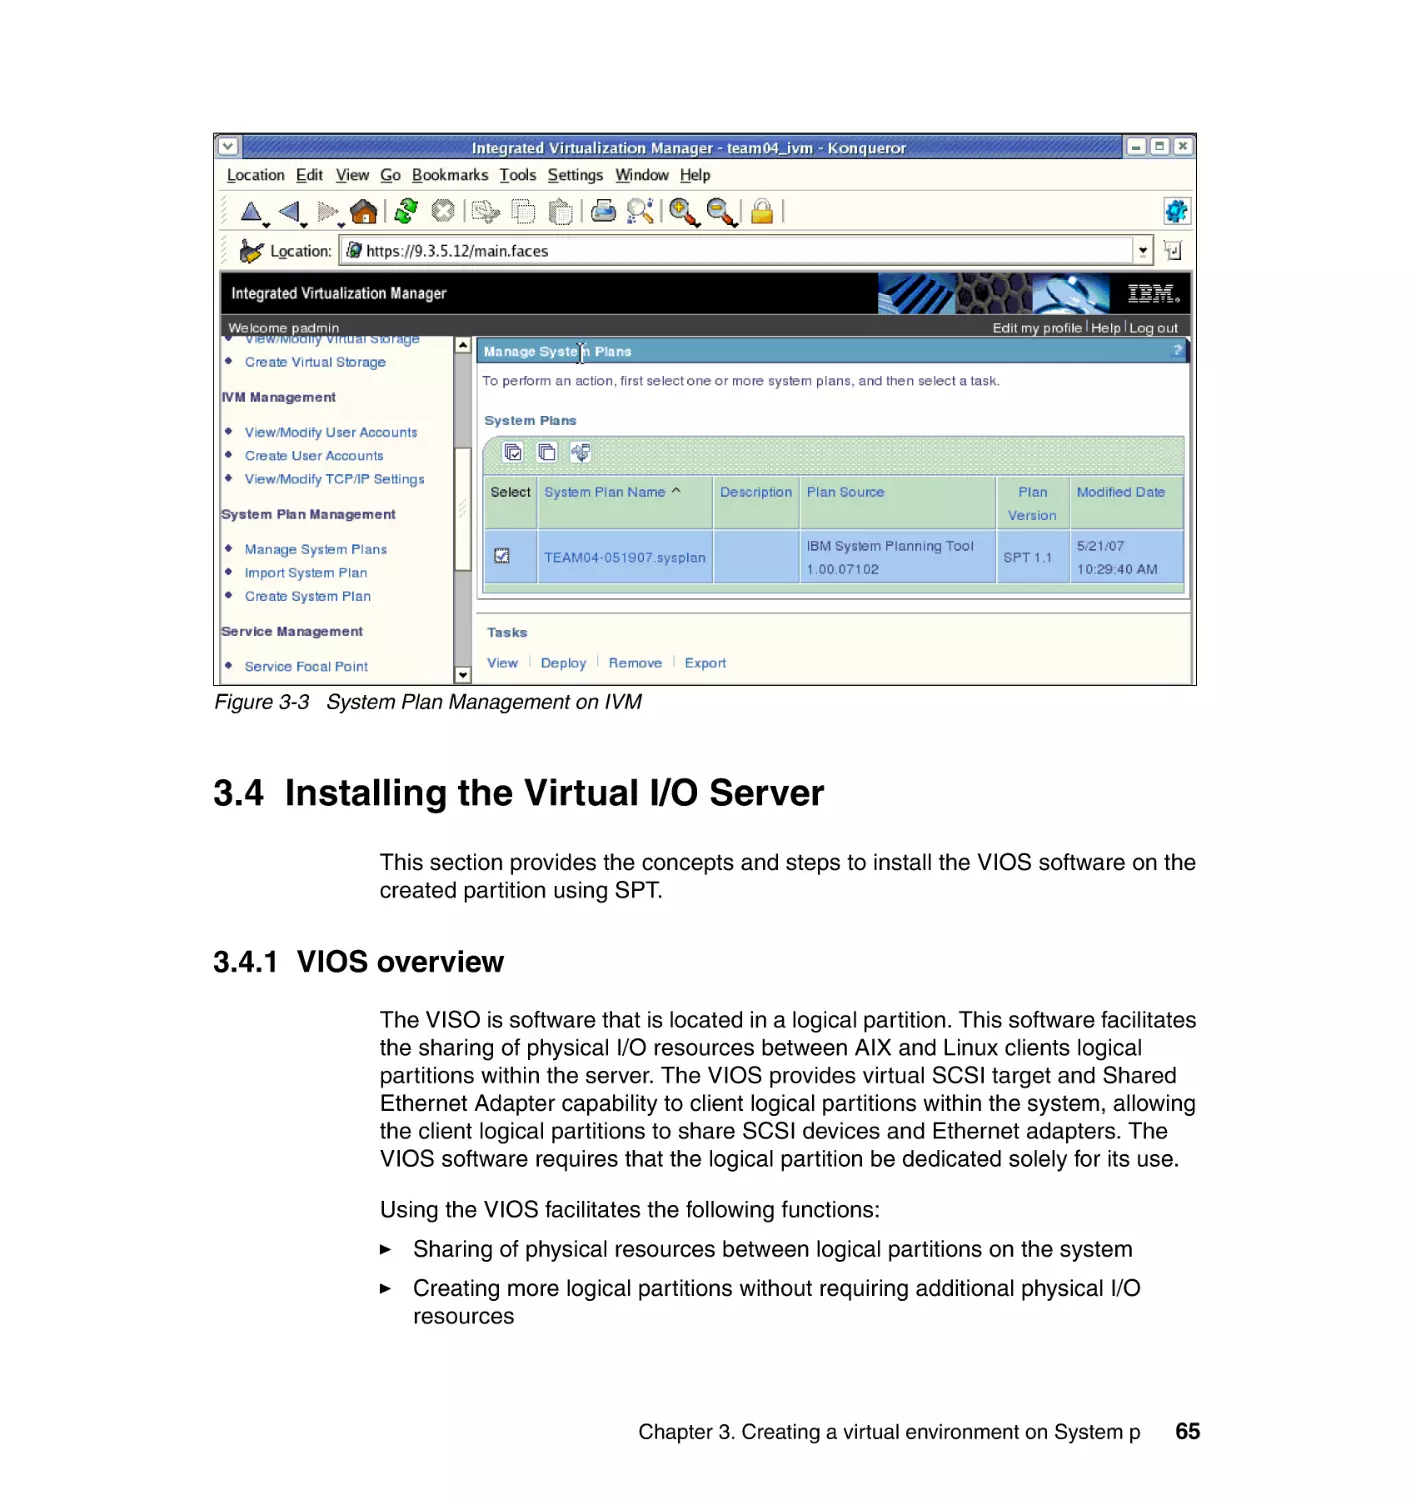 3.4 Installing the Virtual I/O Server
3.4.1 VIOS overview